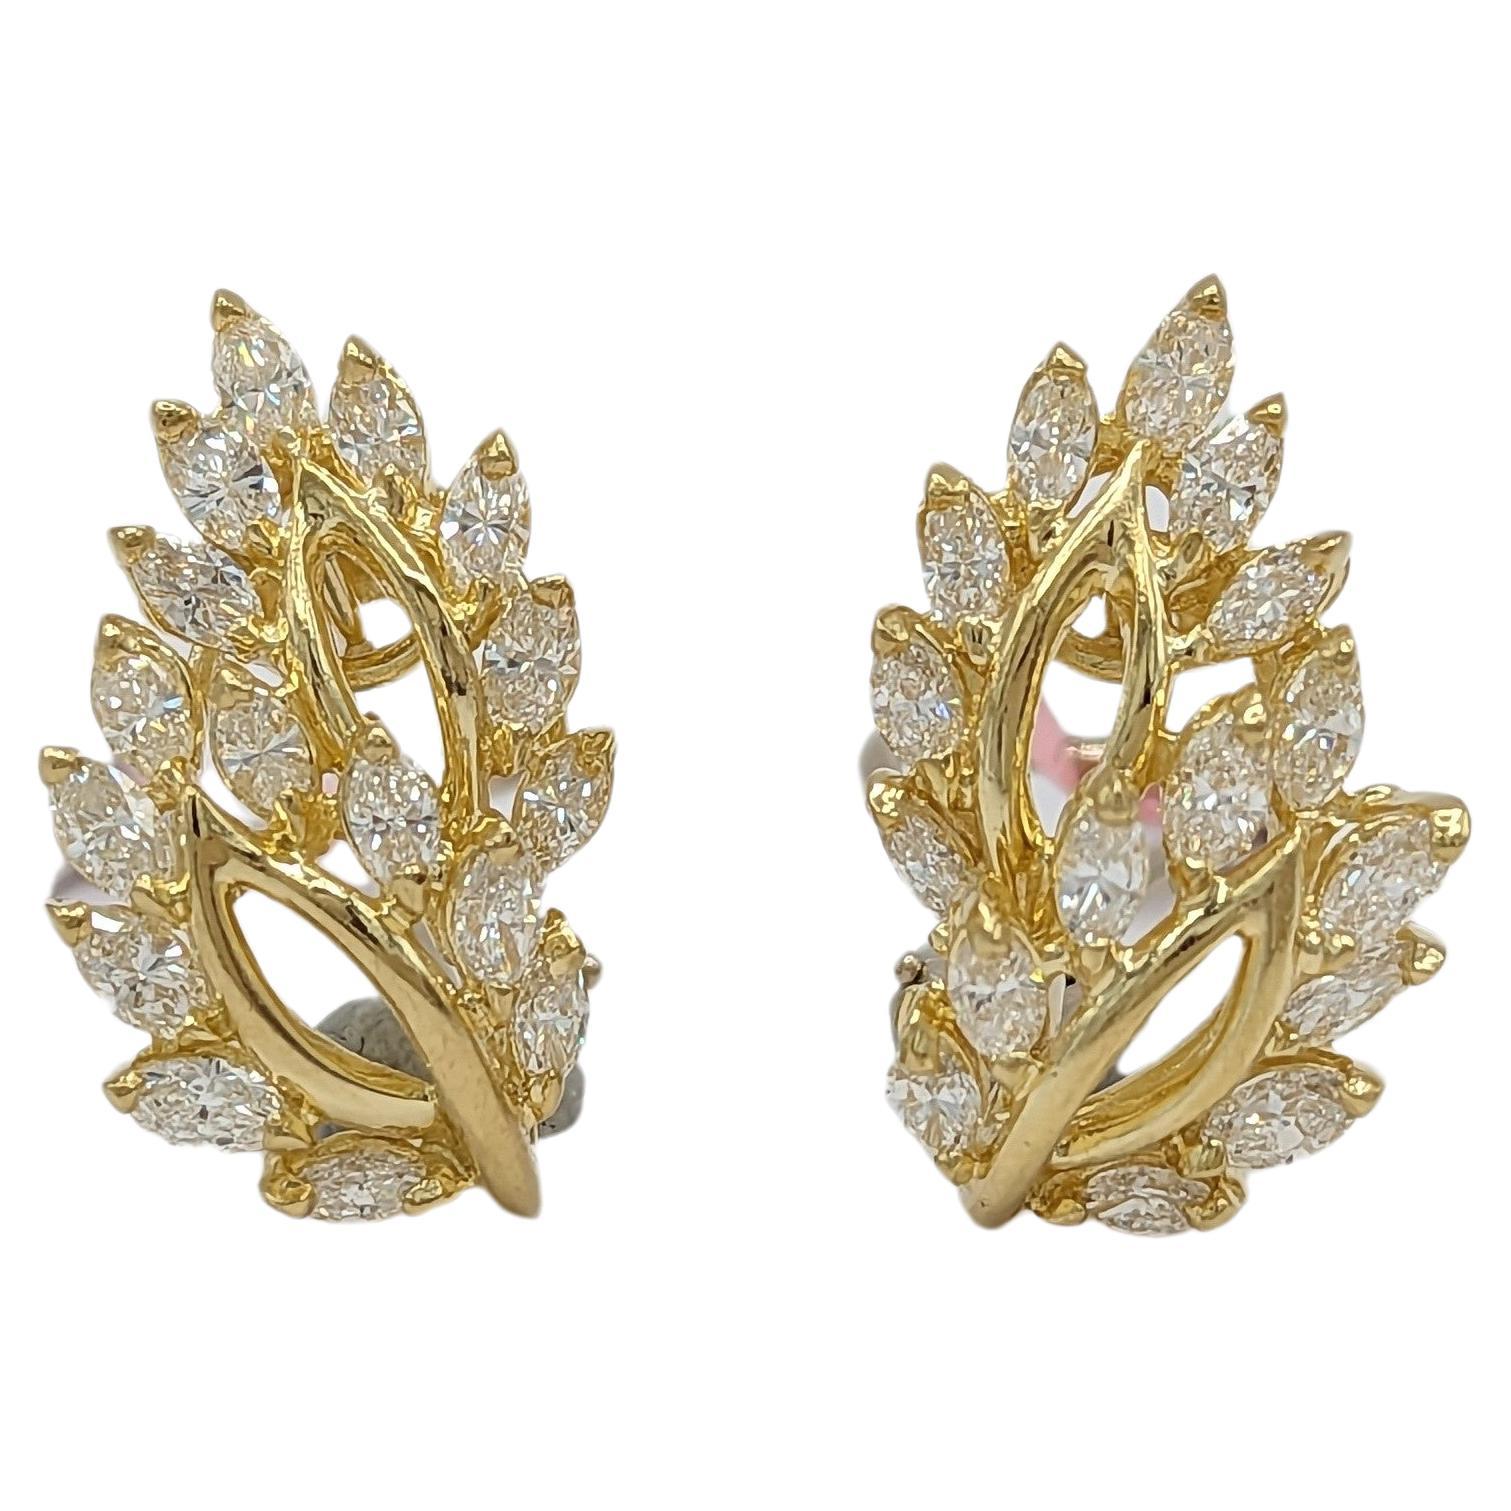 White Diamond Cluster Earrings in 18K Yellow Gold